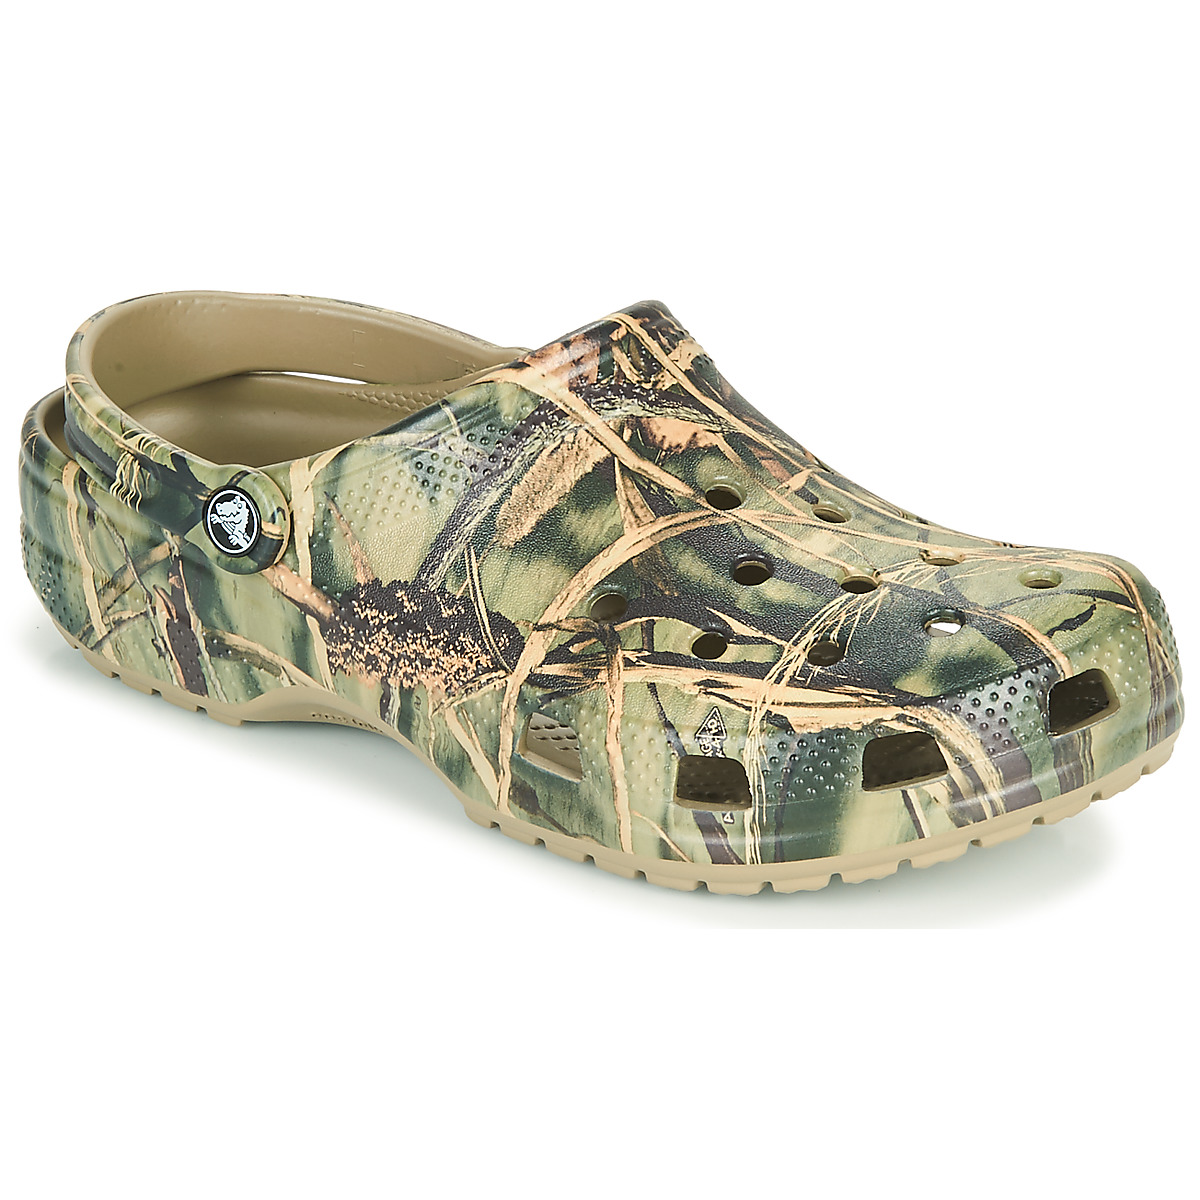 Zapatos Hombre Zuecos (Clogs) Crocs CLASSIC REALTREE Kaki